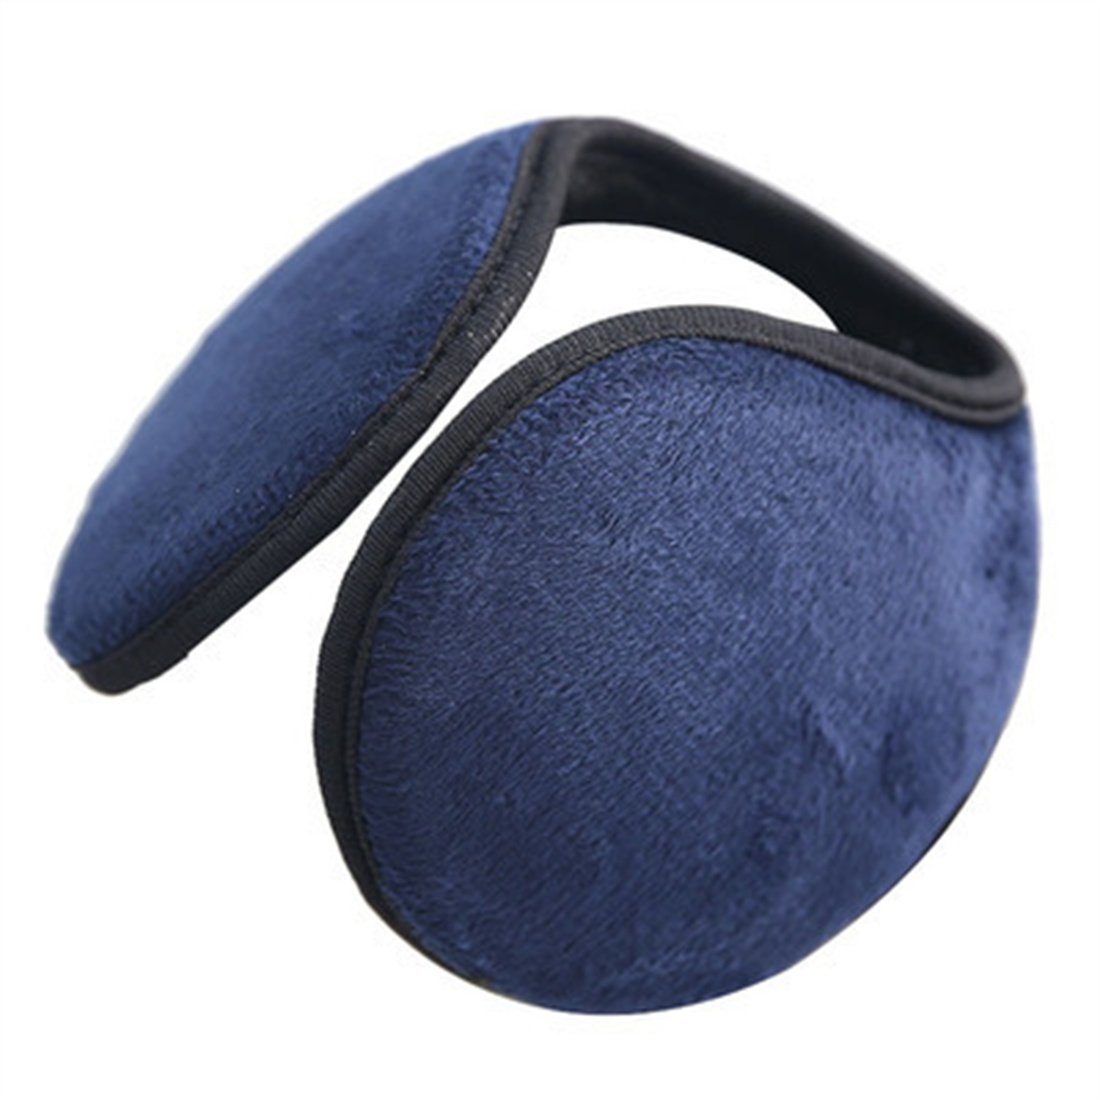 Ohrenschützer Gehörschutz unisex Ohrenschützer, Plüsch blau Winter DÖRÖY warme Ohrenmütze